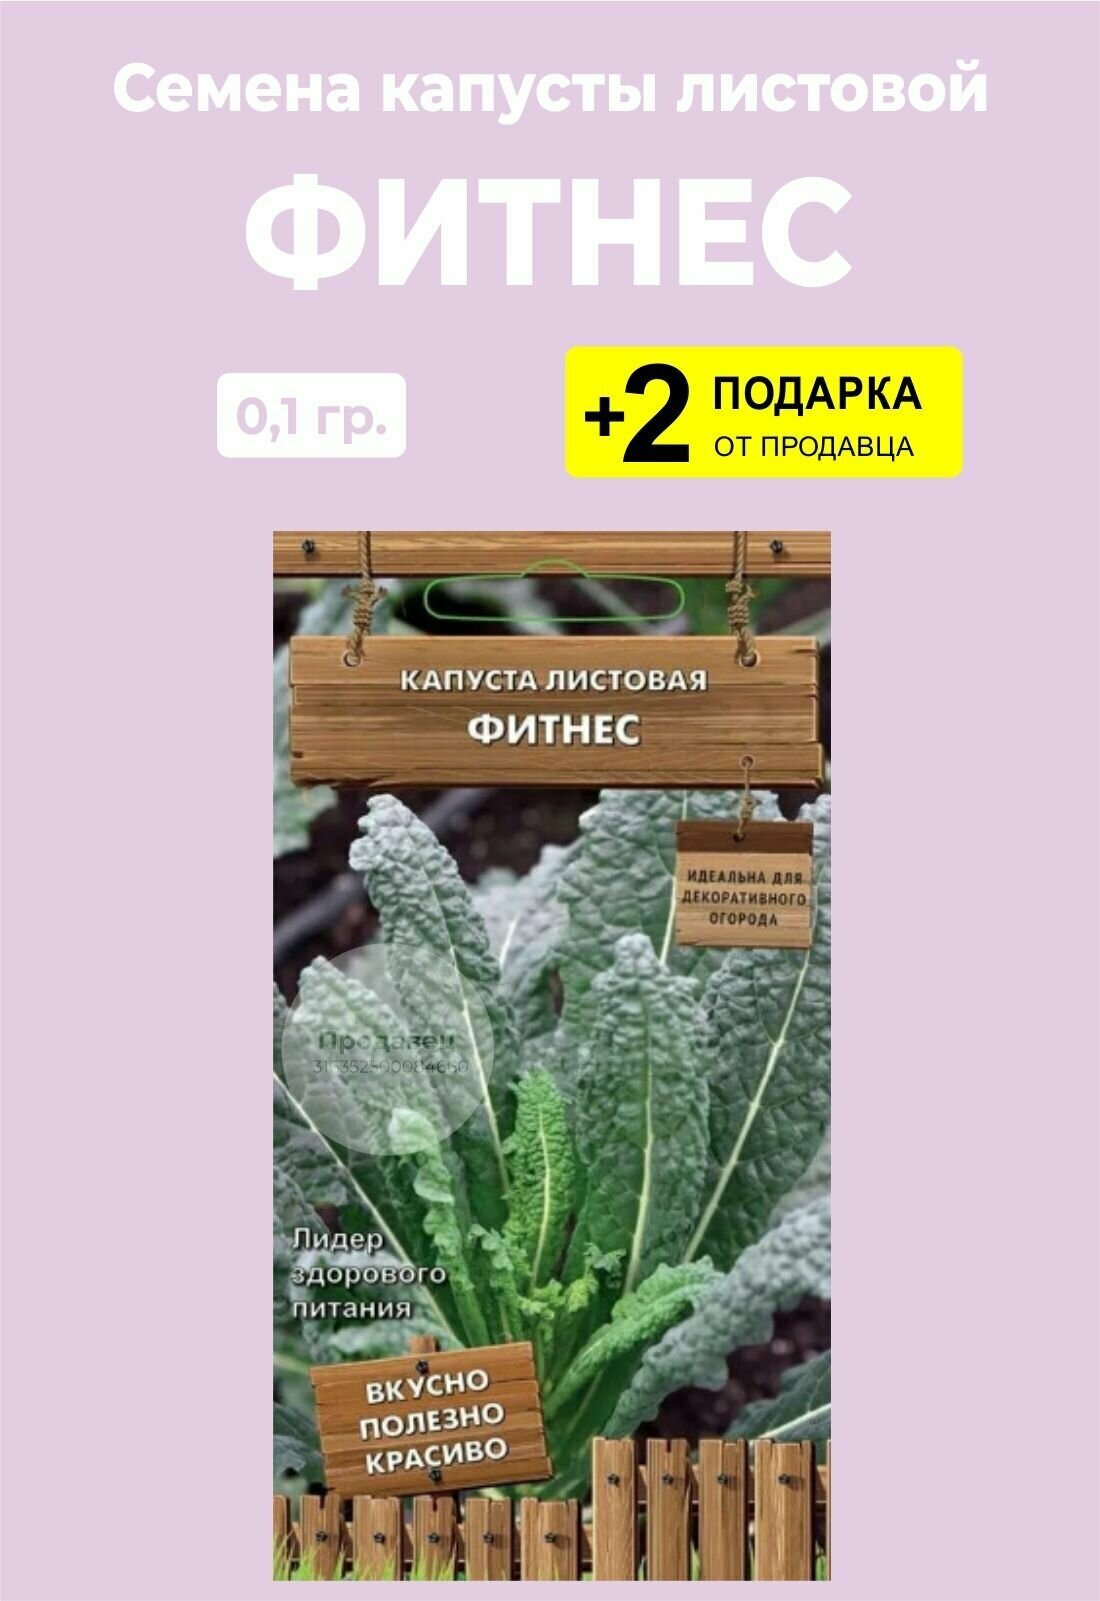 Семена Капуста листовая "Фитнес" 01 гр. + 2 подарка